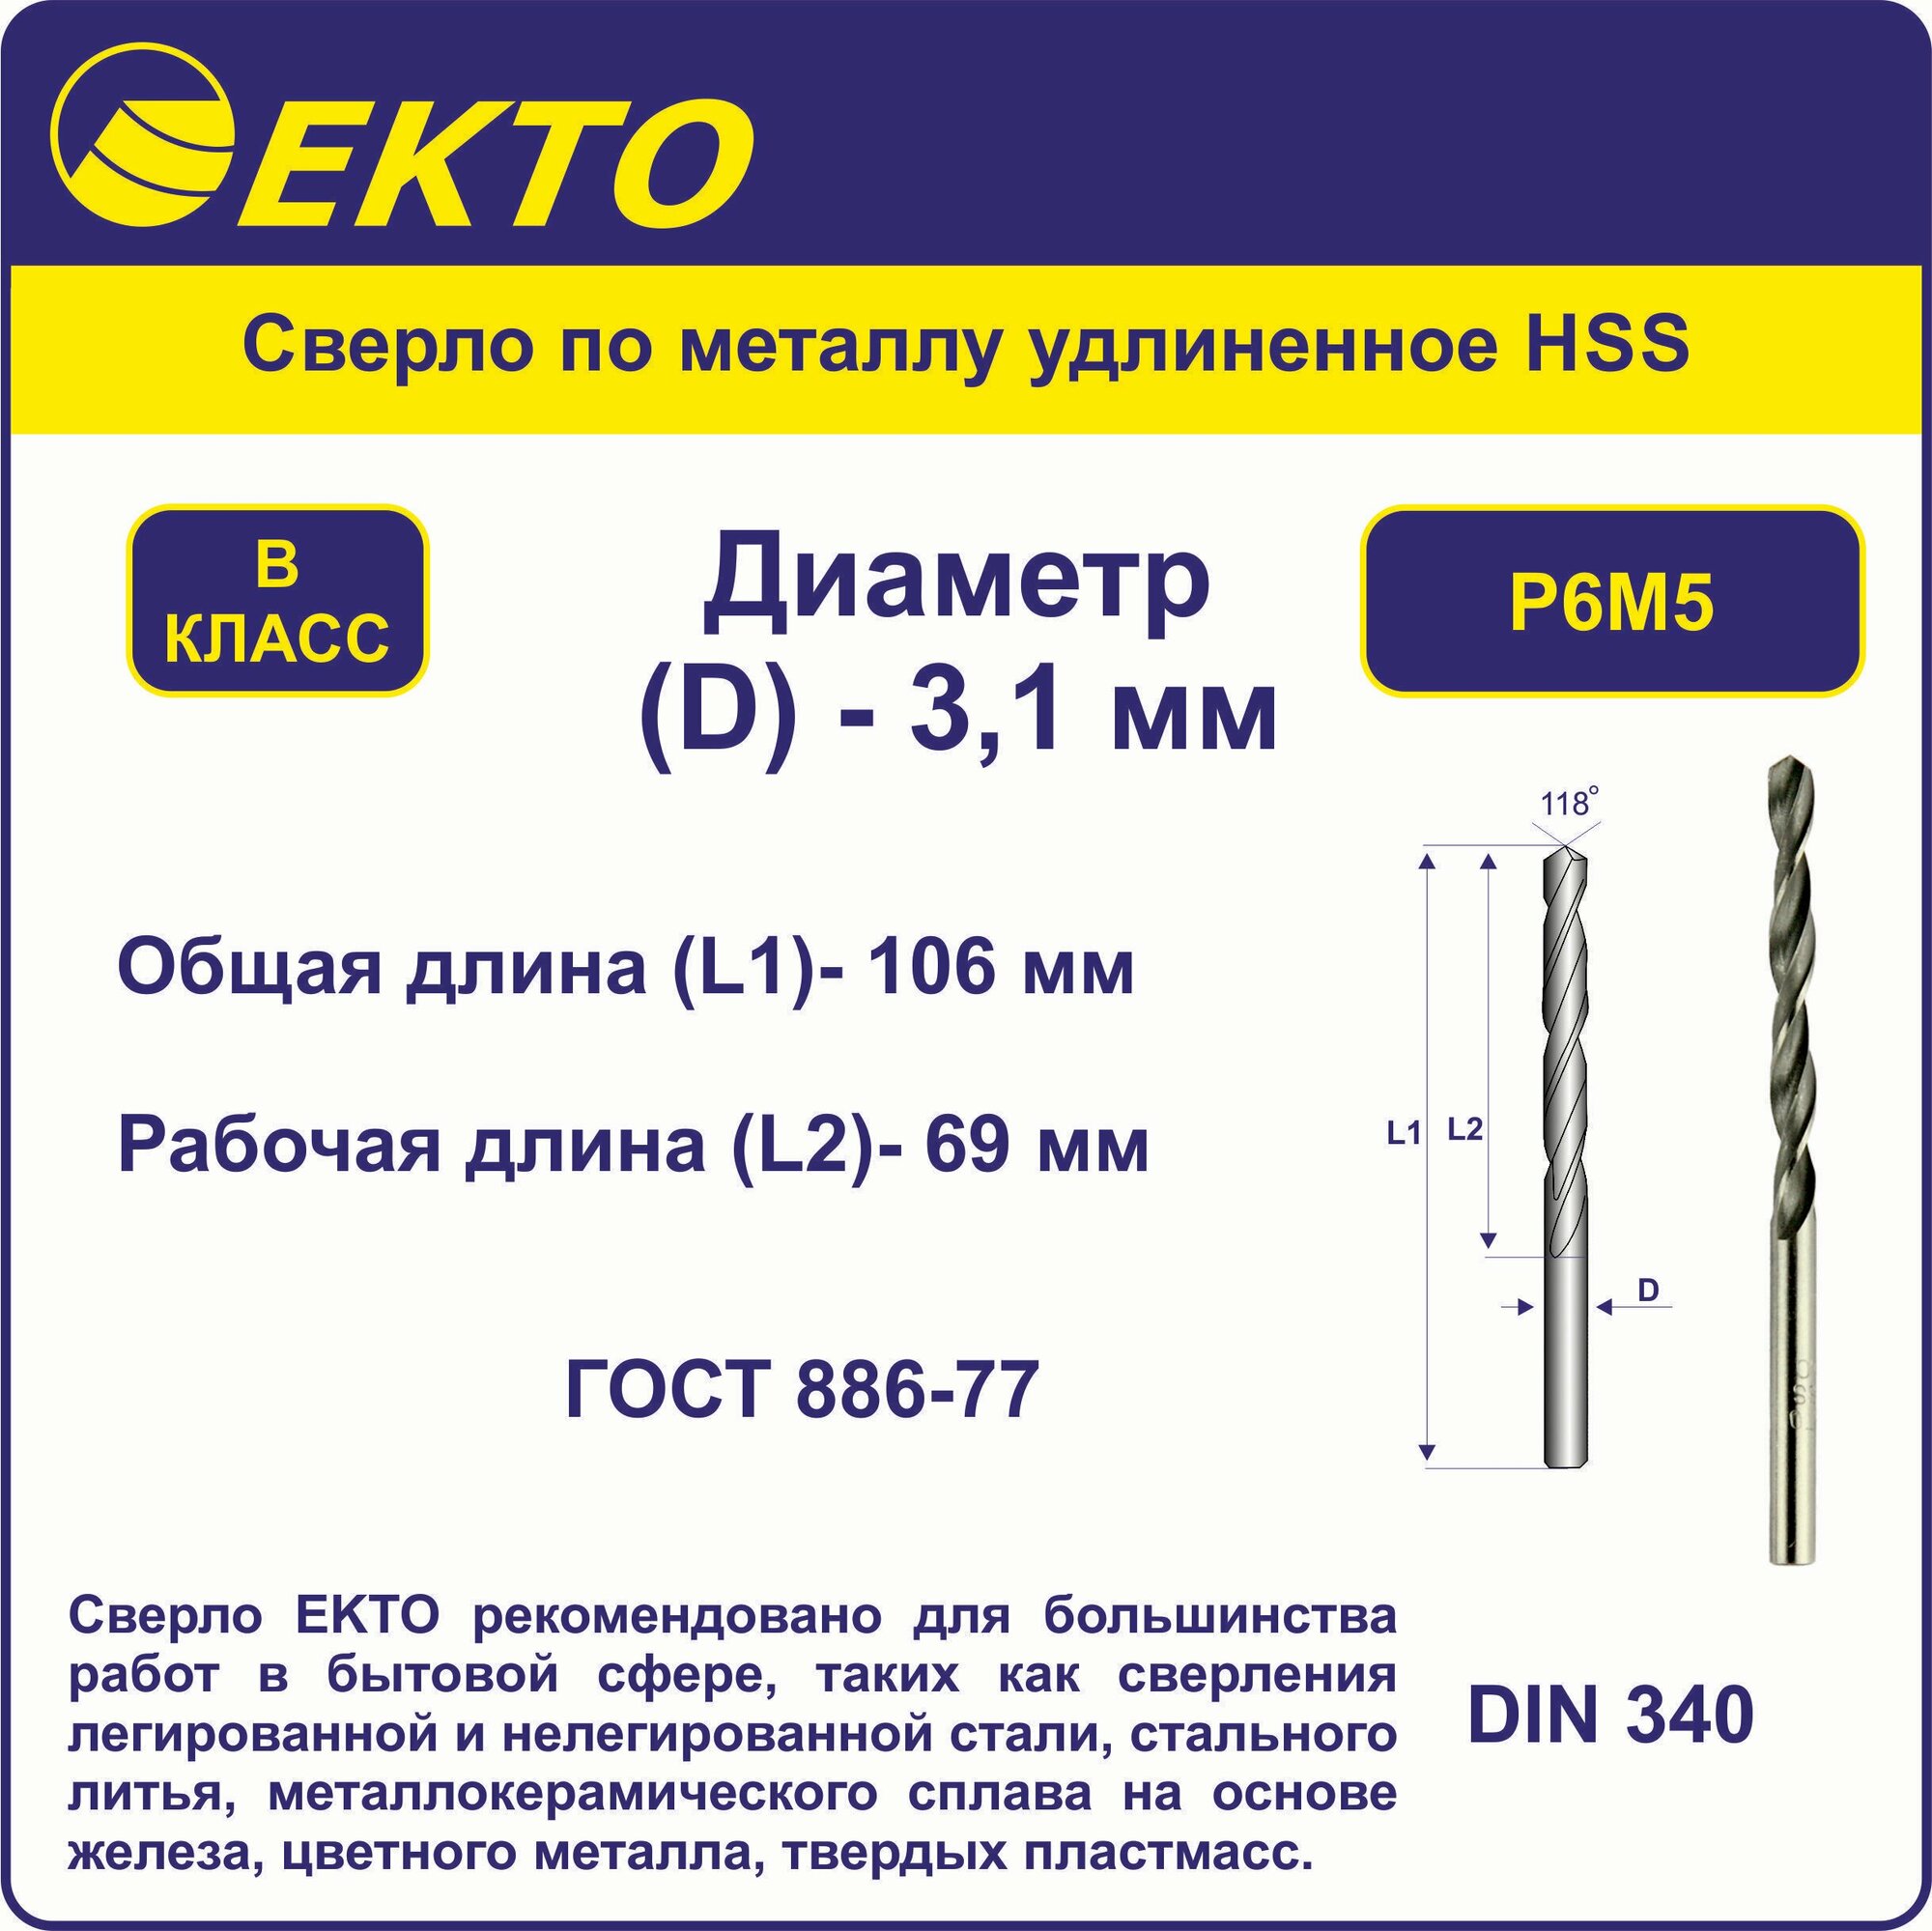 Сверло по металлу удлинённое HSS 3,1 мм цилиндрический хвостовик EKTO